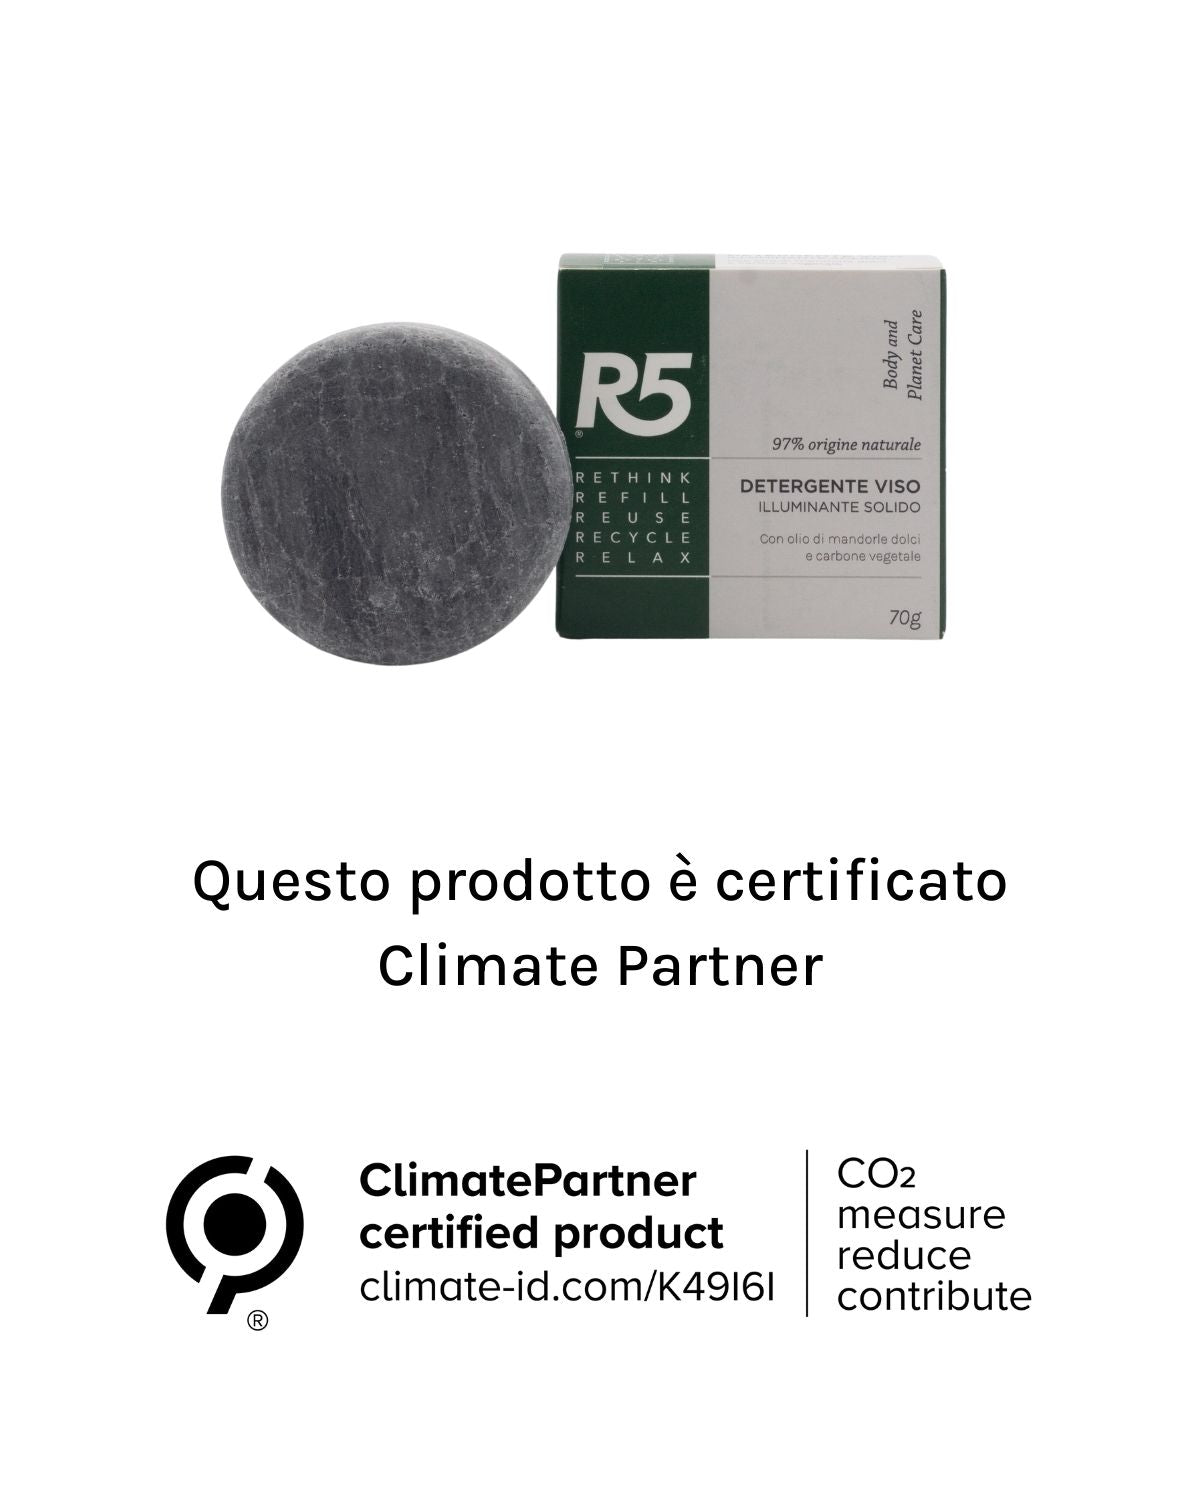 Climate Partner certified detergente viso